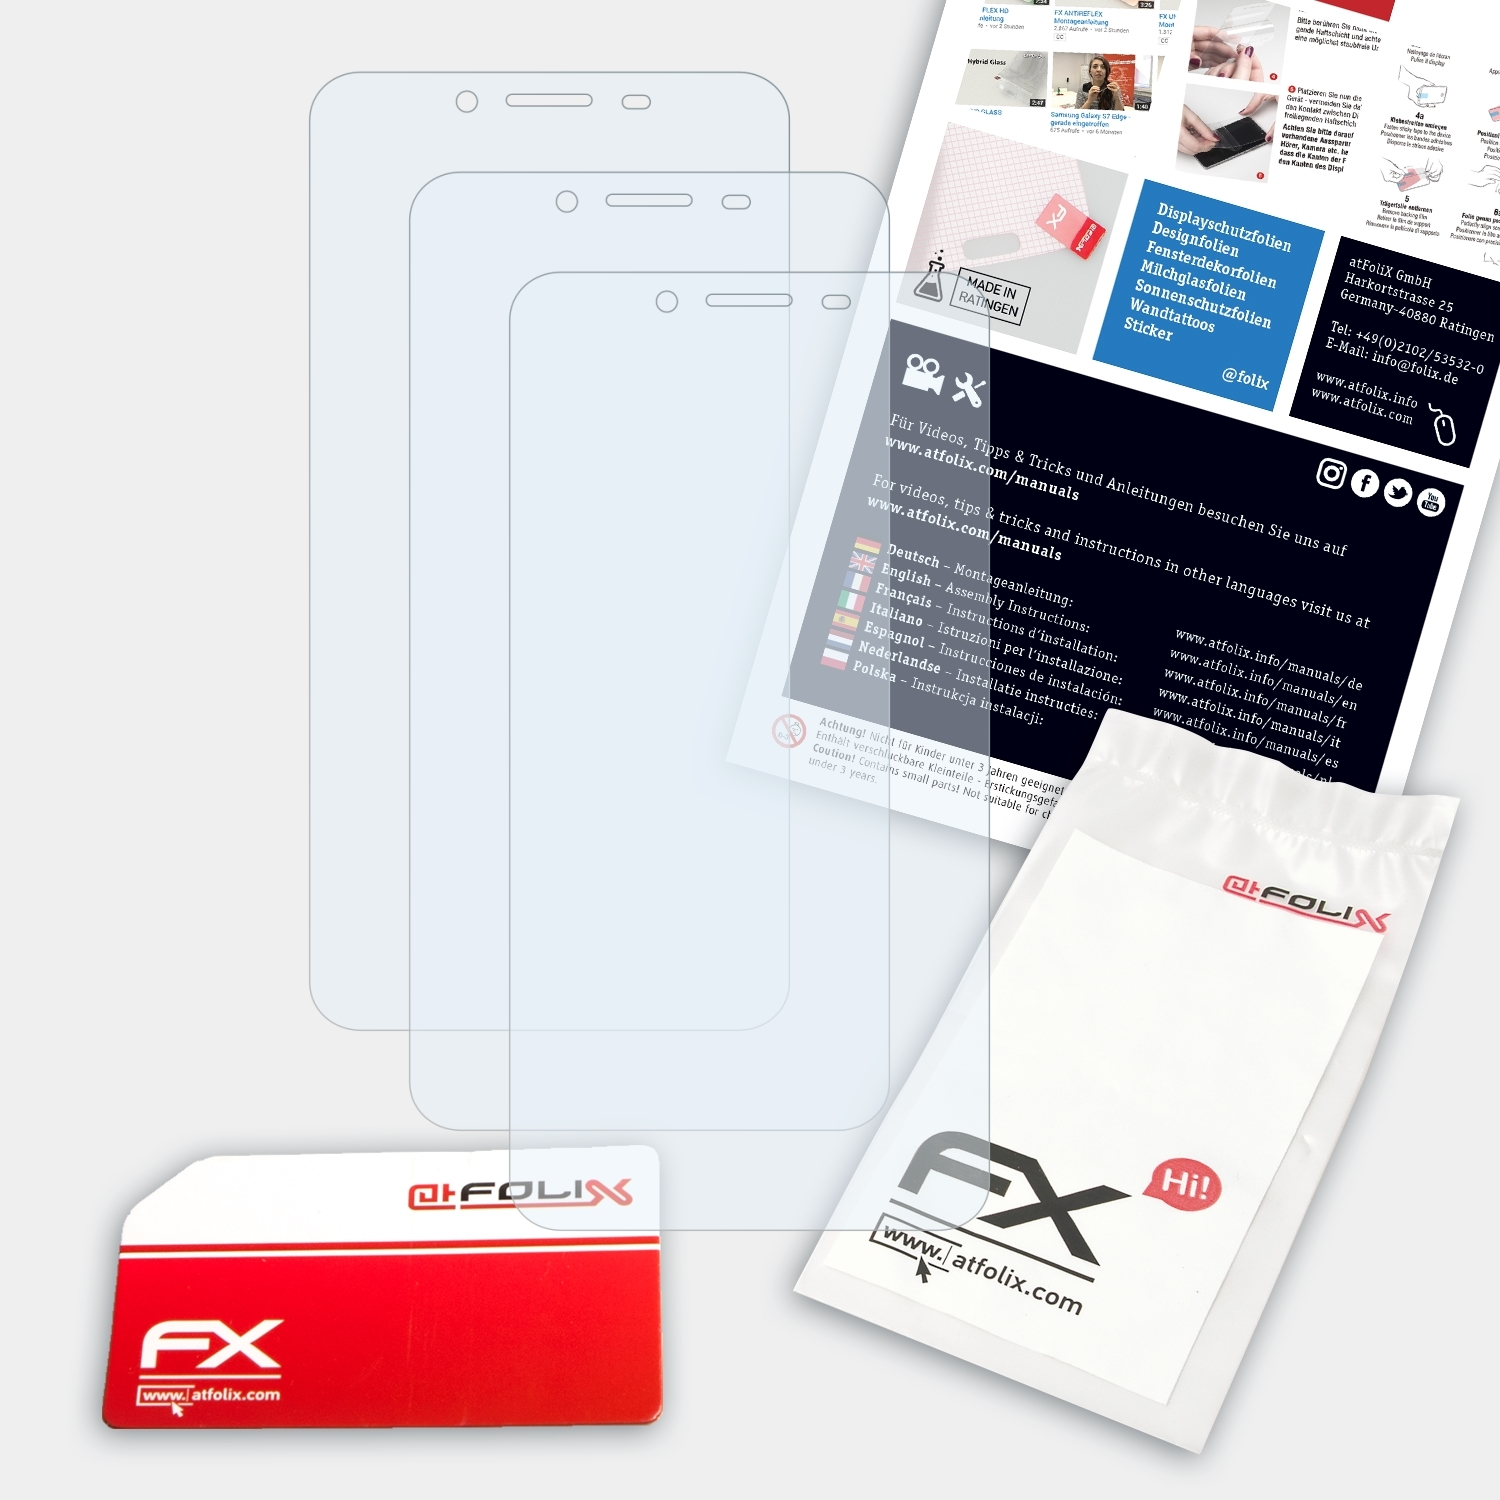 Ultra) Duo FX-Clear ATFOLIX Mediacom PhonePad 3x Displayschutz(für X555U